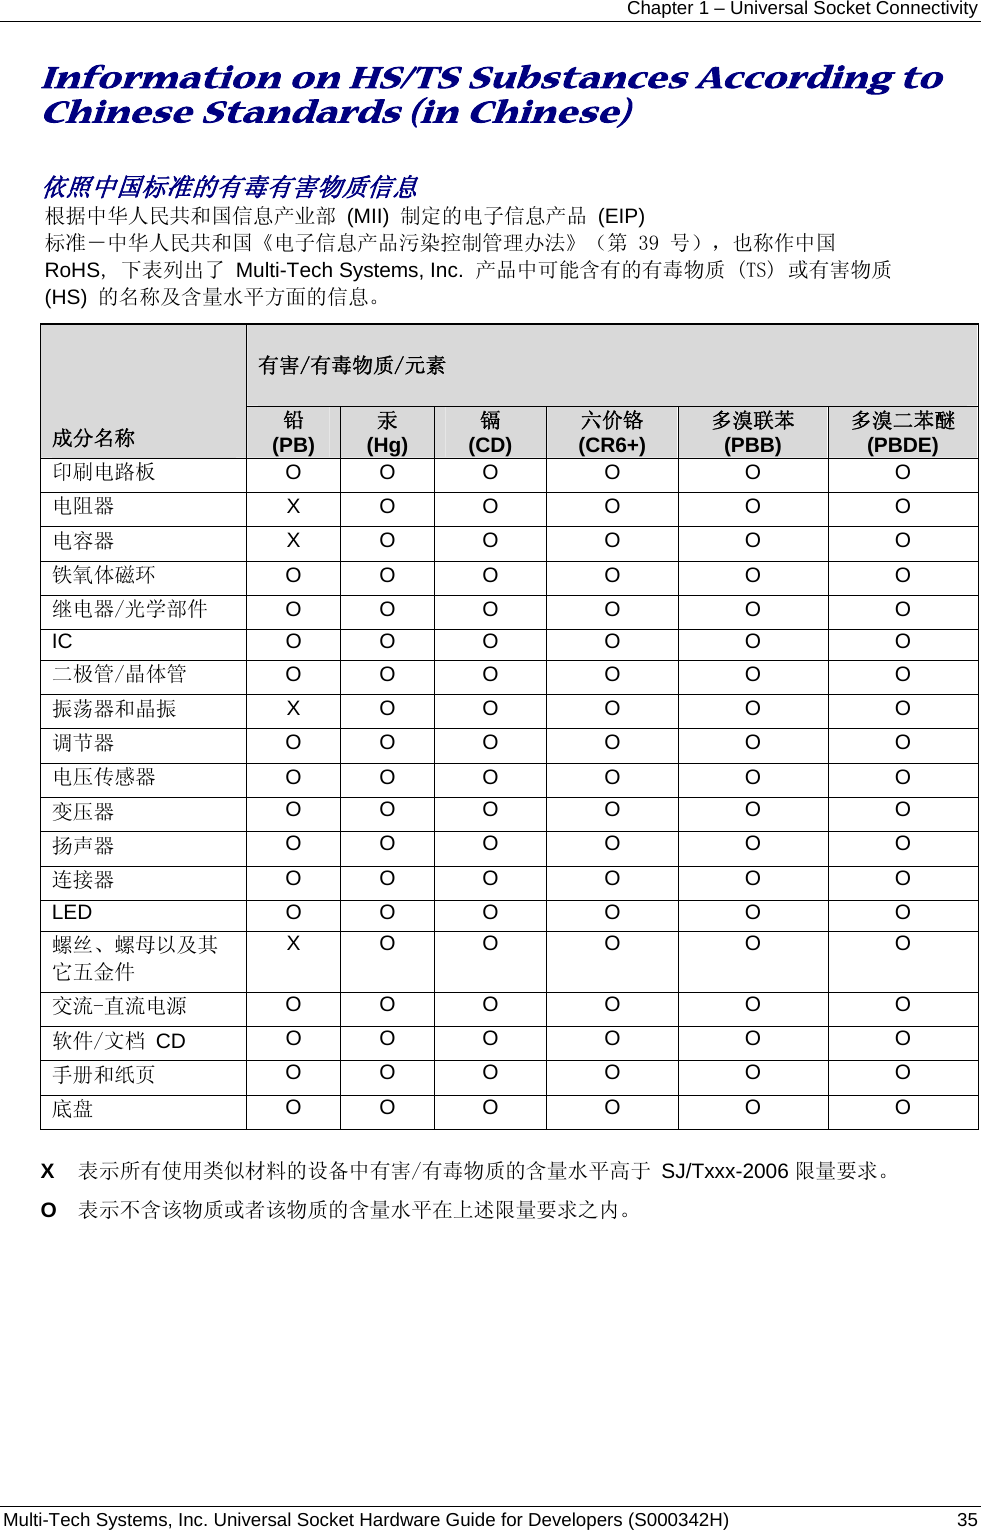 Chapter 1 – Universal Socket Connectivity Multi-Tech Systems, Inc. Universal Socket Hardware Guide for Developers (S000342H)  35  Information on HS/TS Substances According to Chinese Standards (in Chinese)  依照中国标准的有毒有害物质信息 根据中华人民共和国信息产业部 (MII) 制定的电子信息产品 (EIP) 标准－中华人民共和国《电子信息产品污染控制管理办法》（第 39 号），也称作中国 RoHS，下表列出了 Multi-Tech Systems, Inc.  产品中可能含有的有毒物质 (TS) 或有害物质 (HS) 的名称及含量水平方面的信息。              有害/有毒物质/元素            成分名称 铅 (PB) 汞  (Hg) 镉 (CD) 六价铬 (CR6+) 多溴联苯 (PBB) 多溴二苯醚 (PBDE) 印刷电路板  O O  O  O  O  O 电阻器  X O  O  O  O  O 电容器 X O  O  O  O  O 铁氧体磁环  O O  O  O  O  O 继电器/光学部件  O O  O  O  O  O IC O O O O O O 二极管/晶体管  O O  O  O  O  O 振荡器和晶振  X O  O  O  O  O 调节器  O O  O  O  O  O 电压传感器  O O  O  O  O  O 变压器  O O  O  O  O  O 扬声器  O O  O  O  O  O 连接器  O O  O  O  O  O LED O O O O O O 螺丝、螺母以及其它五金件 X O  O  O  O  O 交流-直流电源  O O  O  O  O  O 软件/文档 CD O O  O  O  O  O 手册和纸页 O O  O  O  O  O 底盘  O O  O  O  O  O  X 表示所有使用类似材料的设备中有害/有毒物质的含量水平高于 SJ/Txxx-2006 限量要求。 O 表示不含该物质或者该物质的含量水平在上述限量要求之内。     